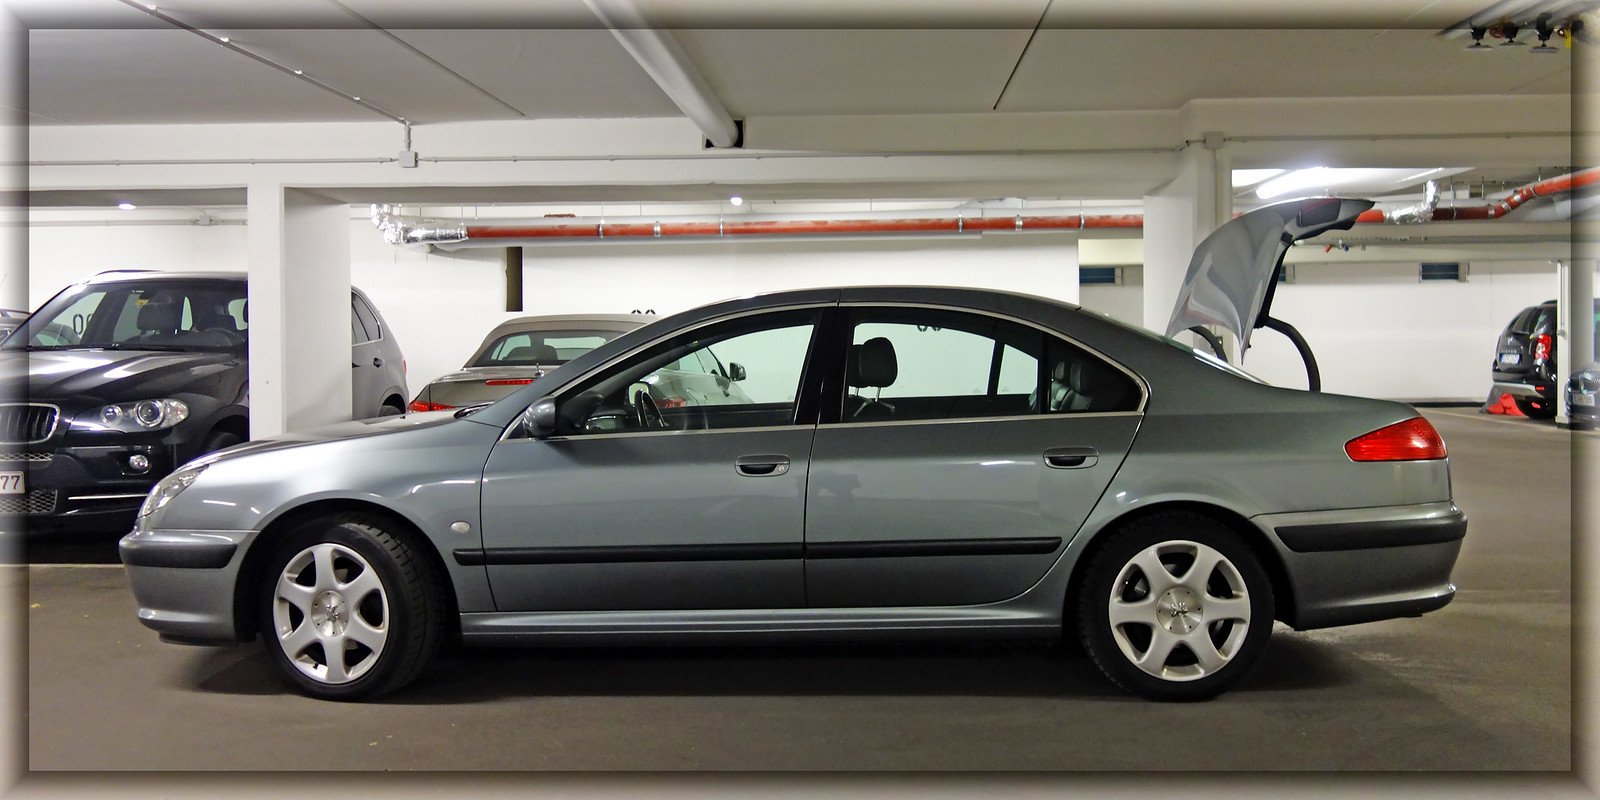 Peugeot 607 exterior - Side Profile